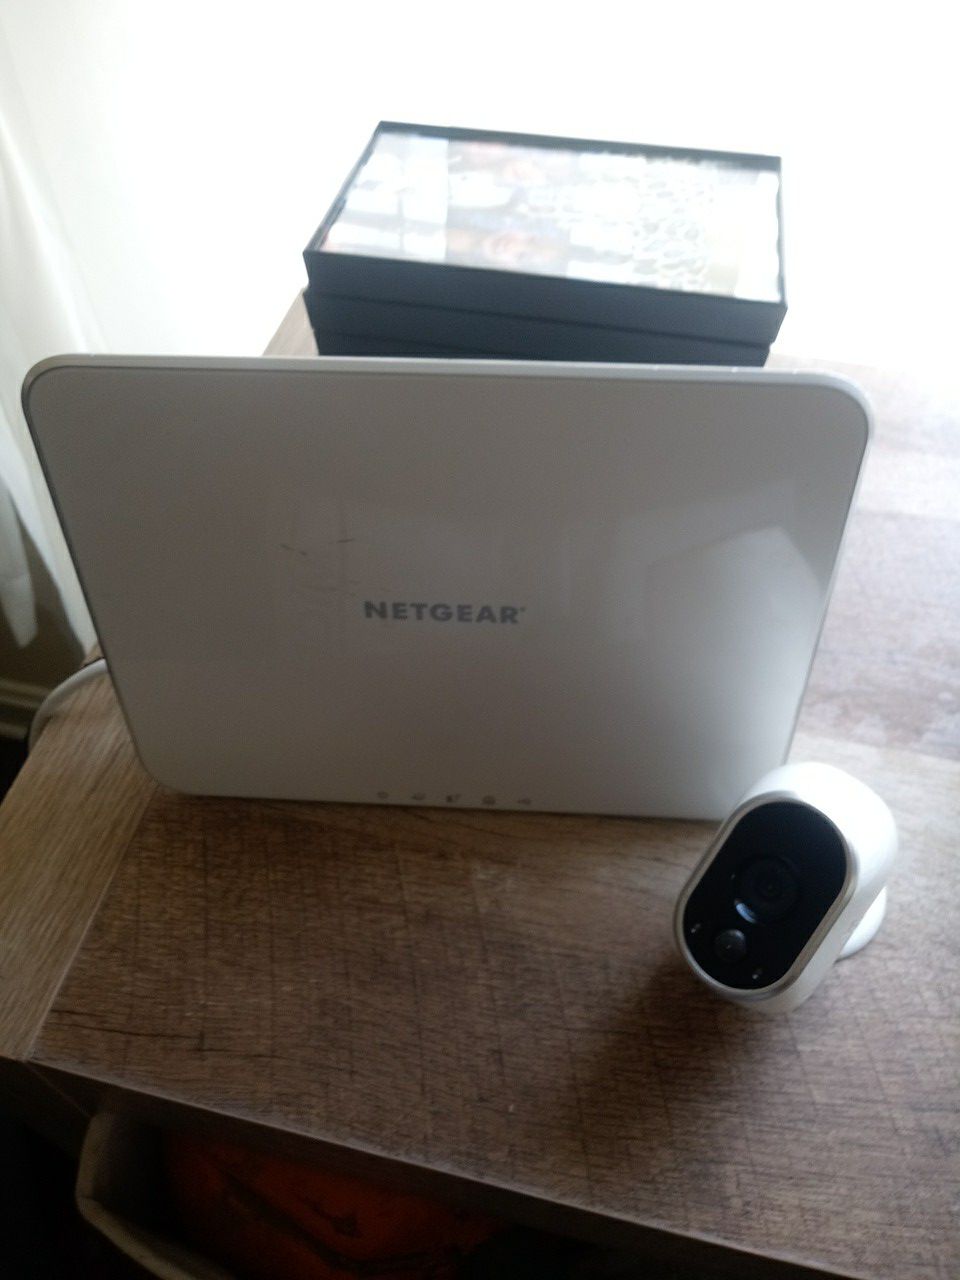 Netgear wireless security camera